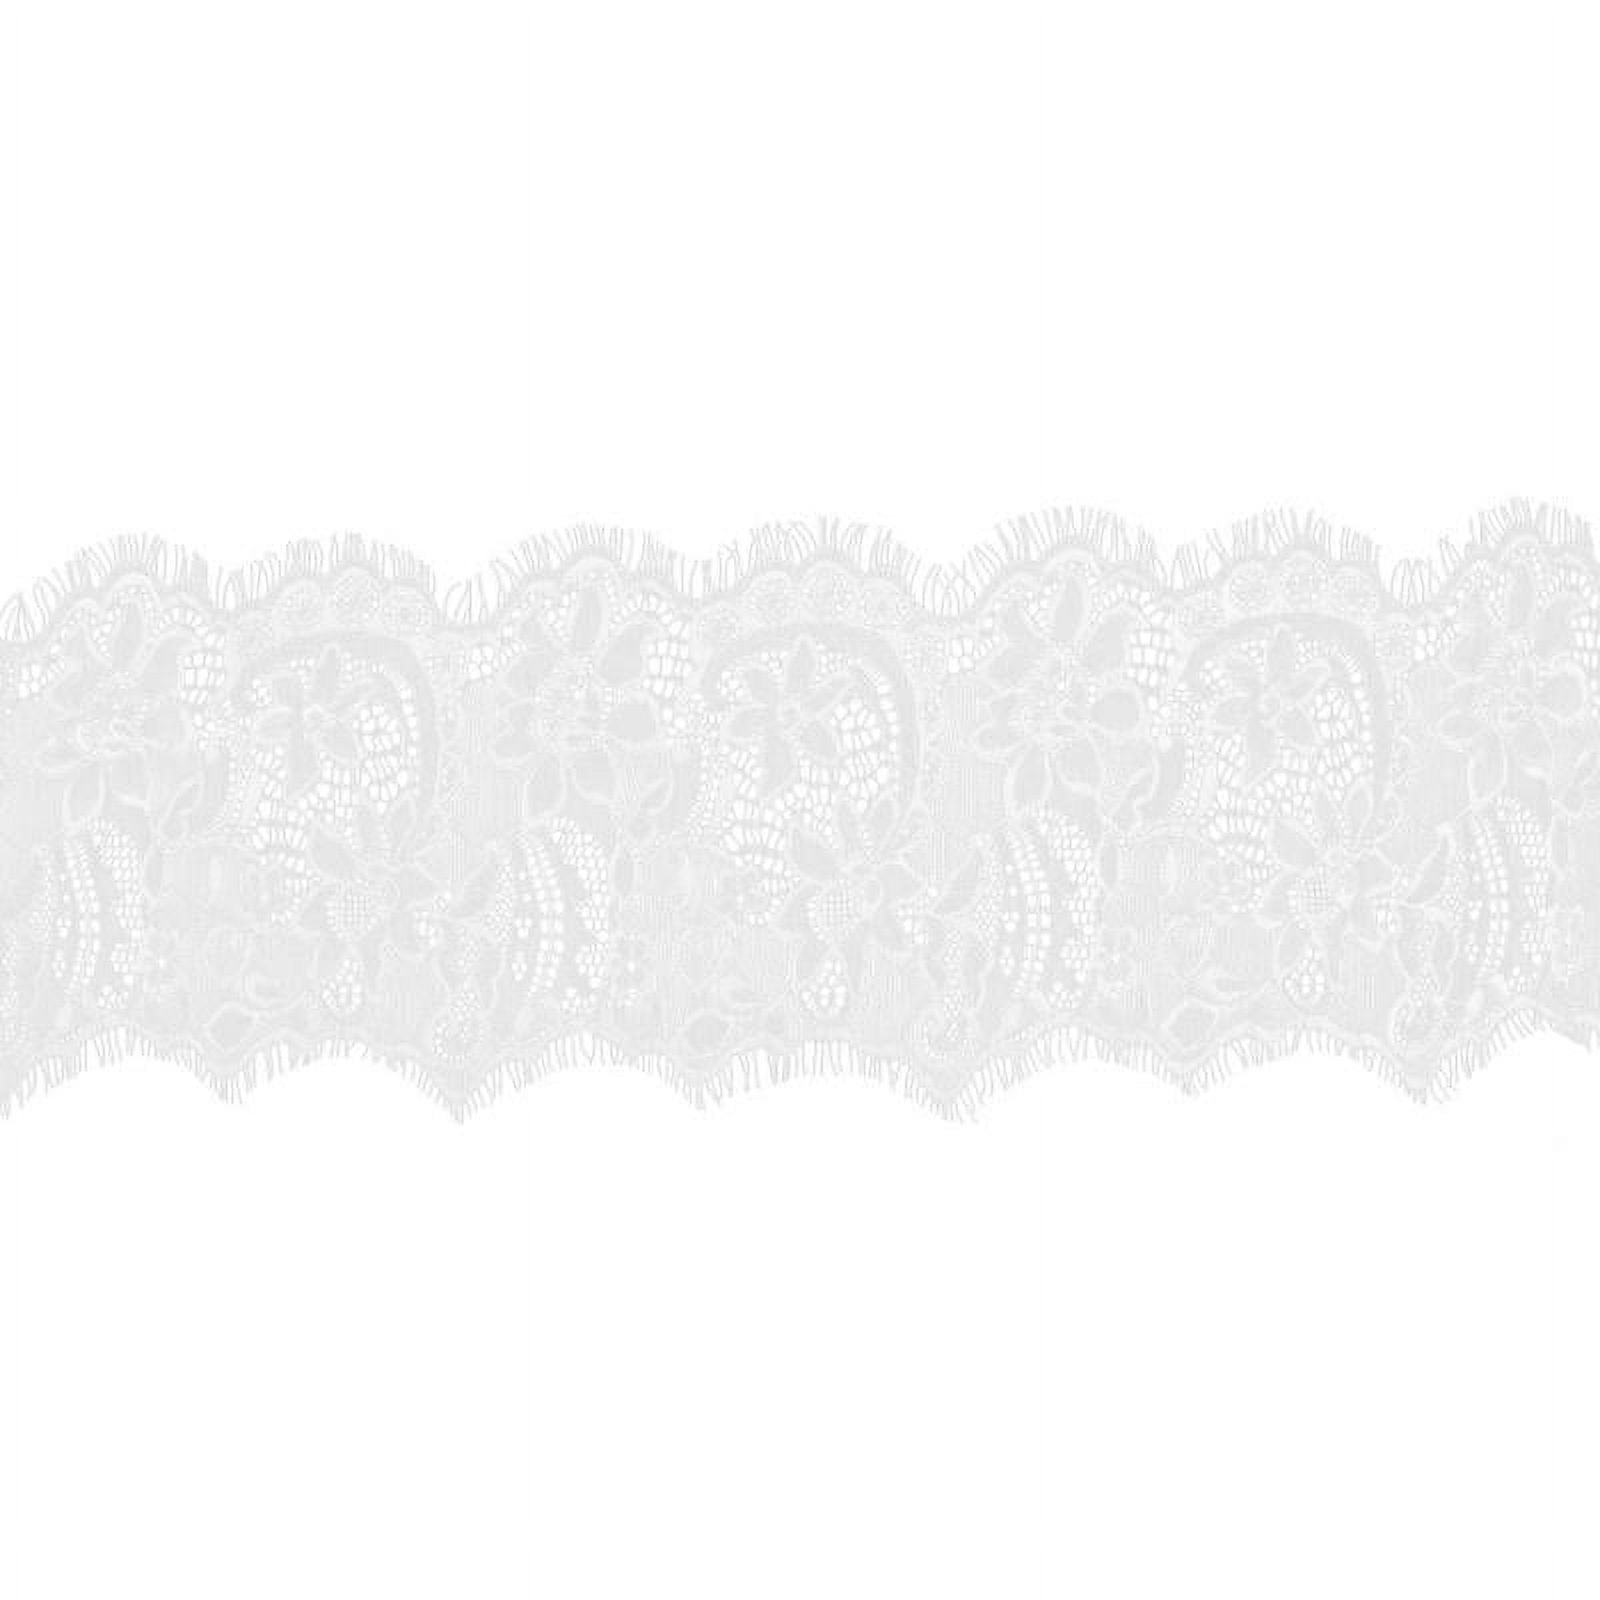 3YA Lace Ribbon Eyelash Edge Mesh 3 Flower Lace Trimmings 18cm White, As described